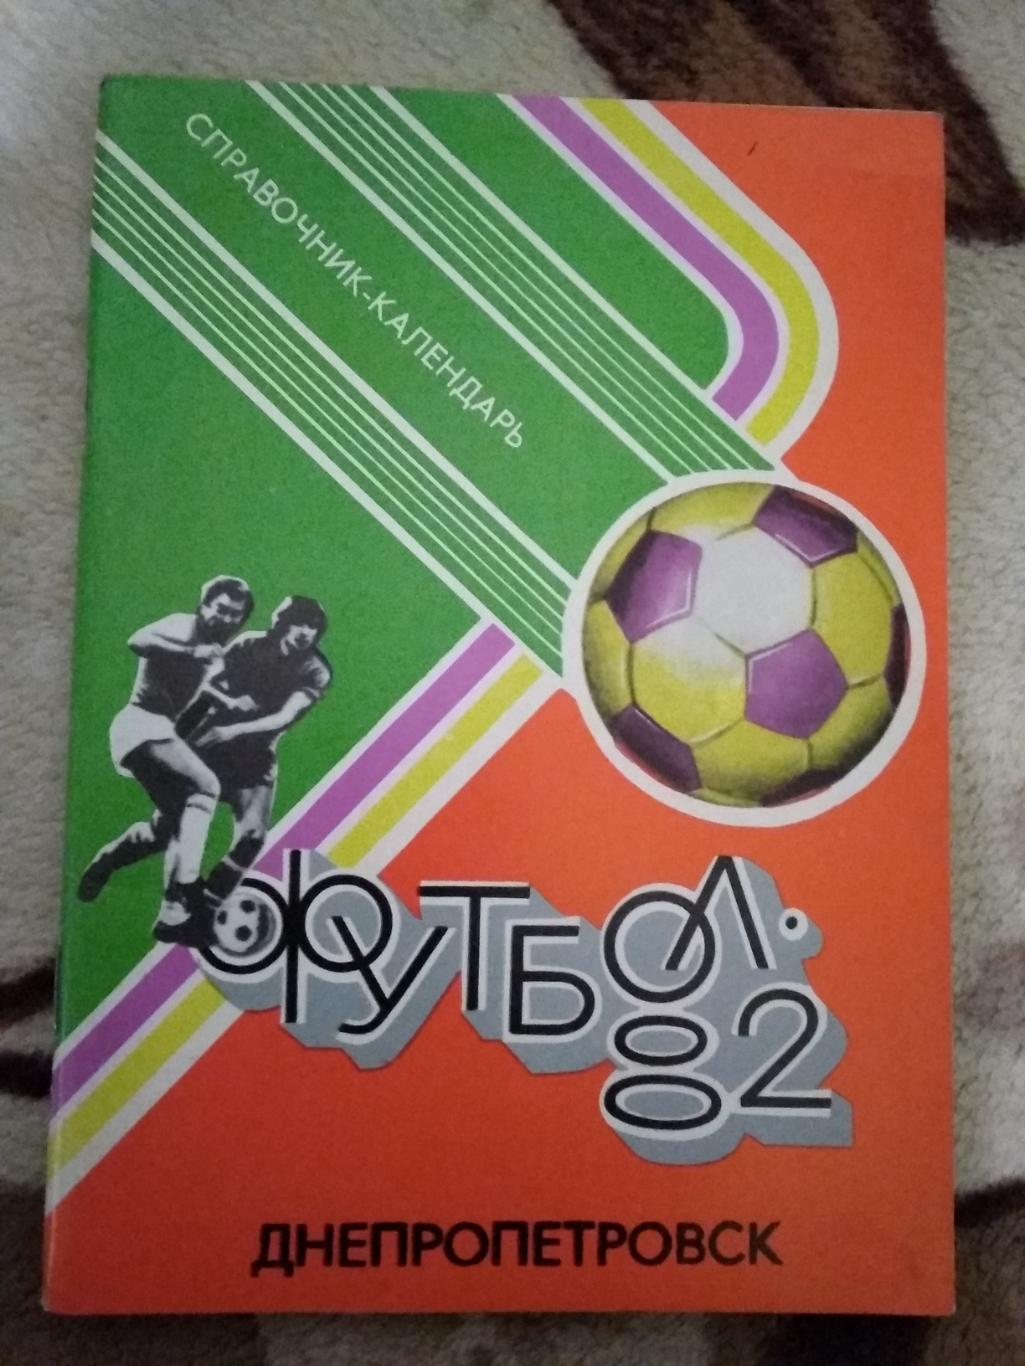 Футбол.Днепропетровск 1982 г.